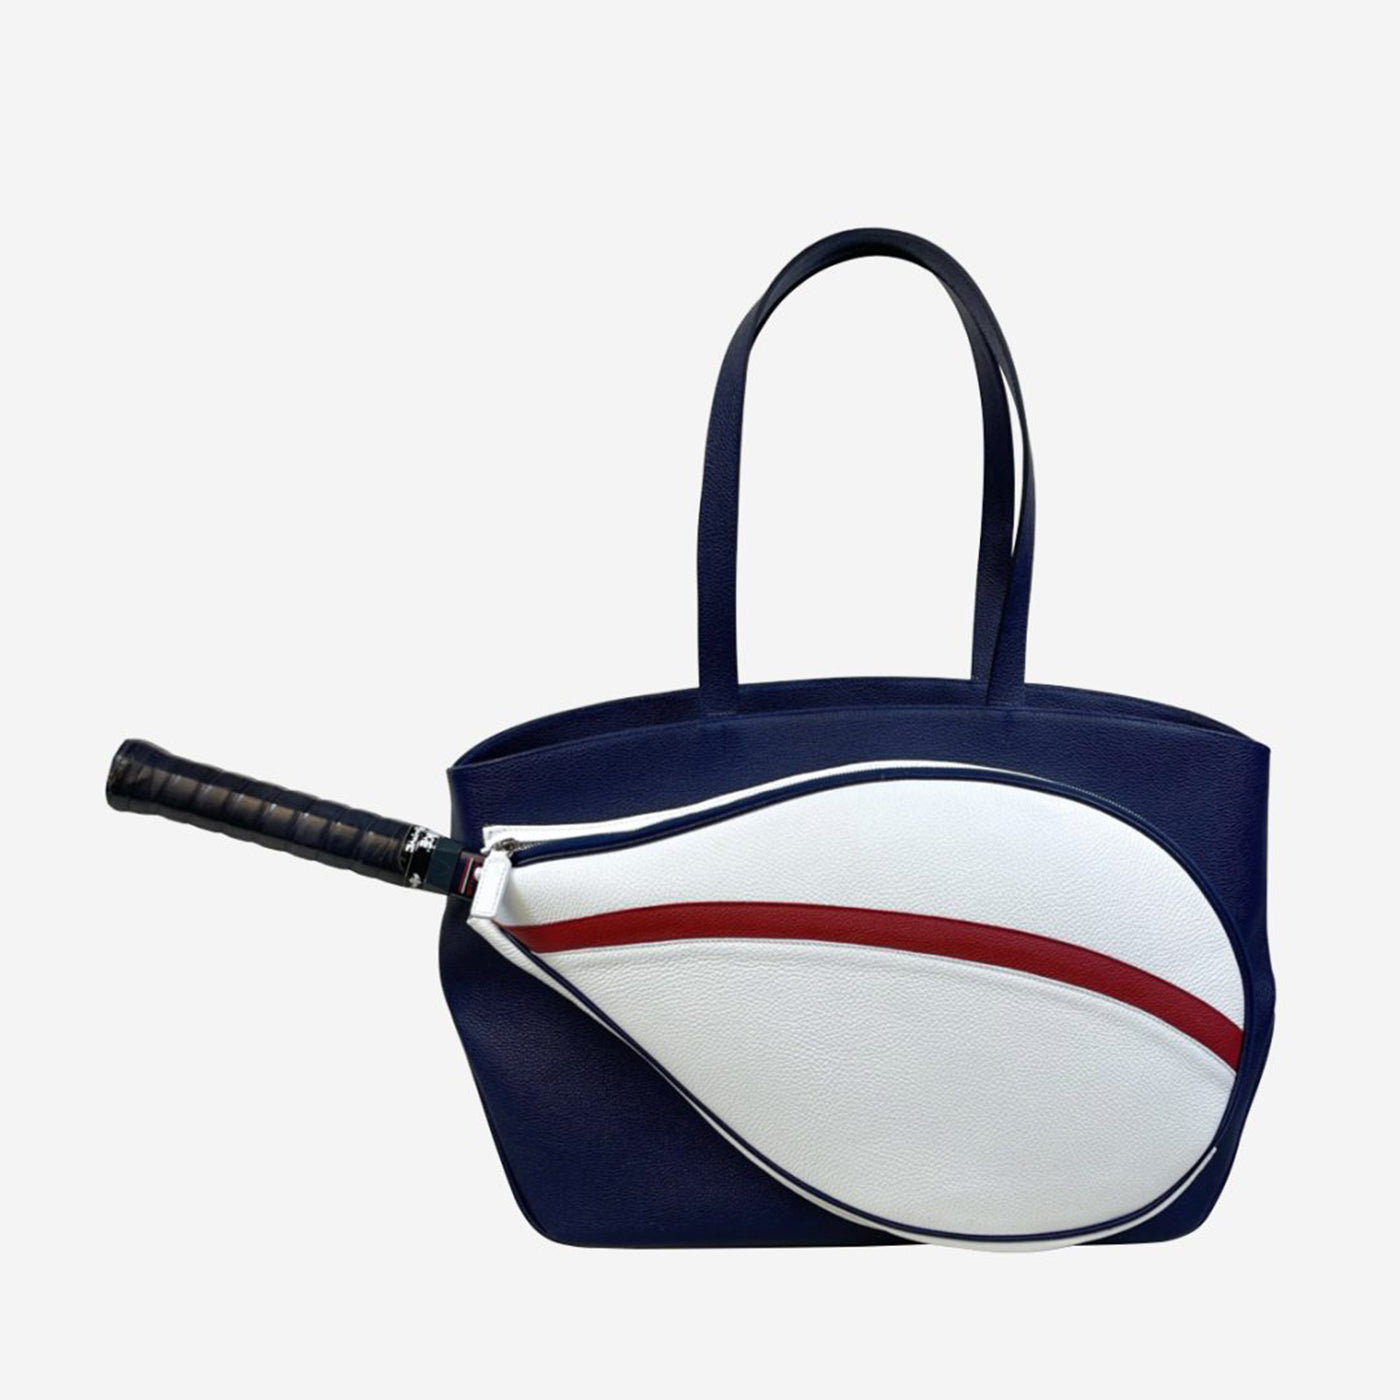 Bolsa de deporte azul/roja/blanca con bolsillo en forma de raqueta de tenis - Vista alternativa 5